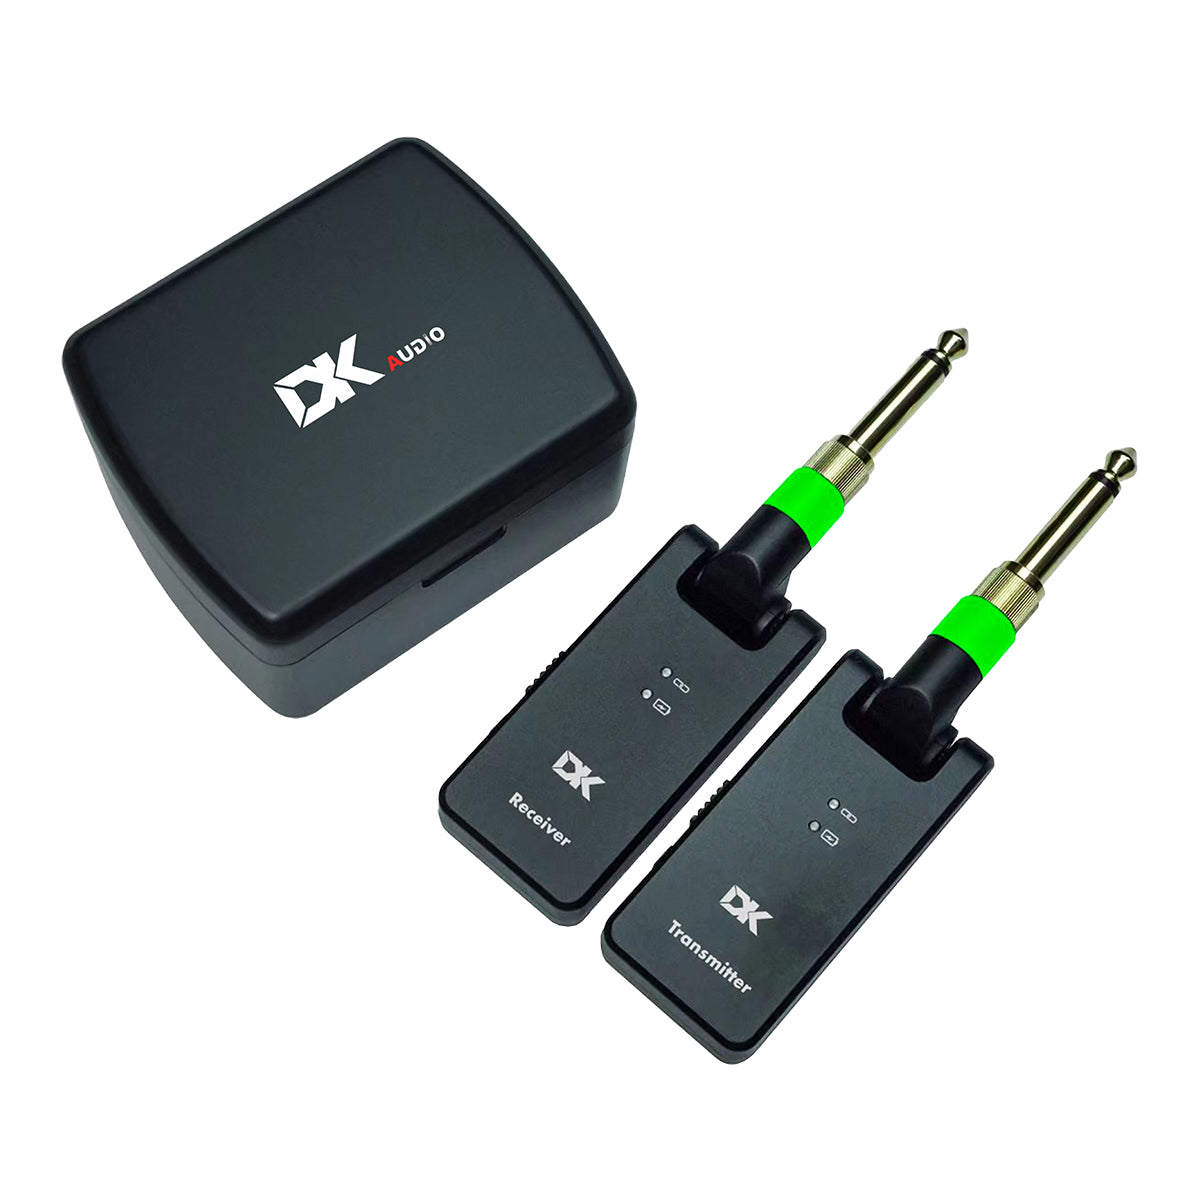 DK IW-30 Guitar Wireless System - 2.4GHz Transmitter&Receiver Inbox Charging Kit